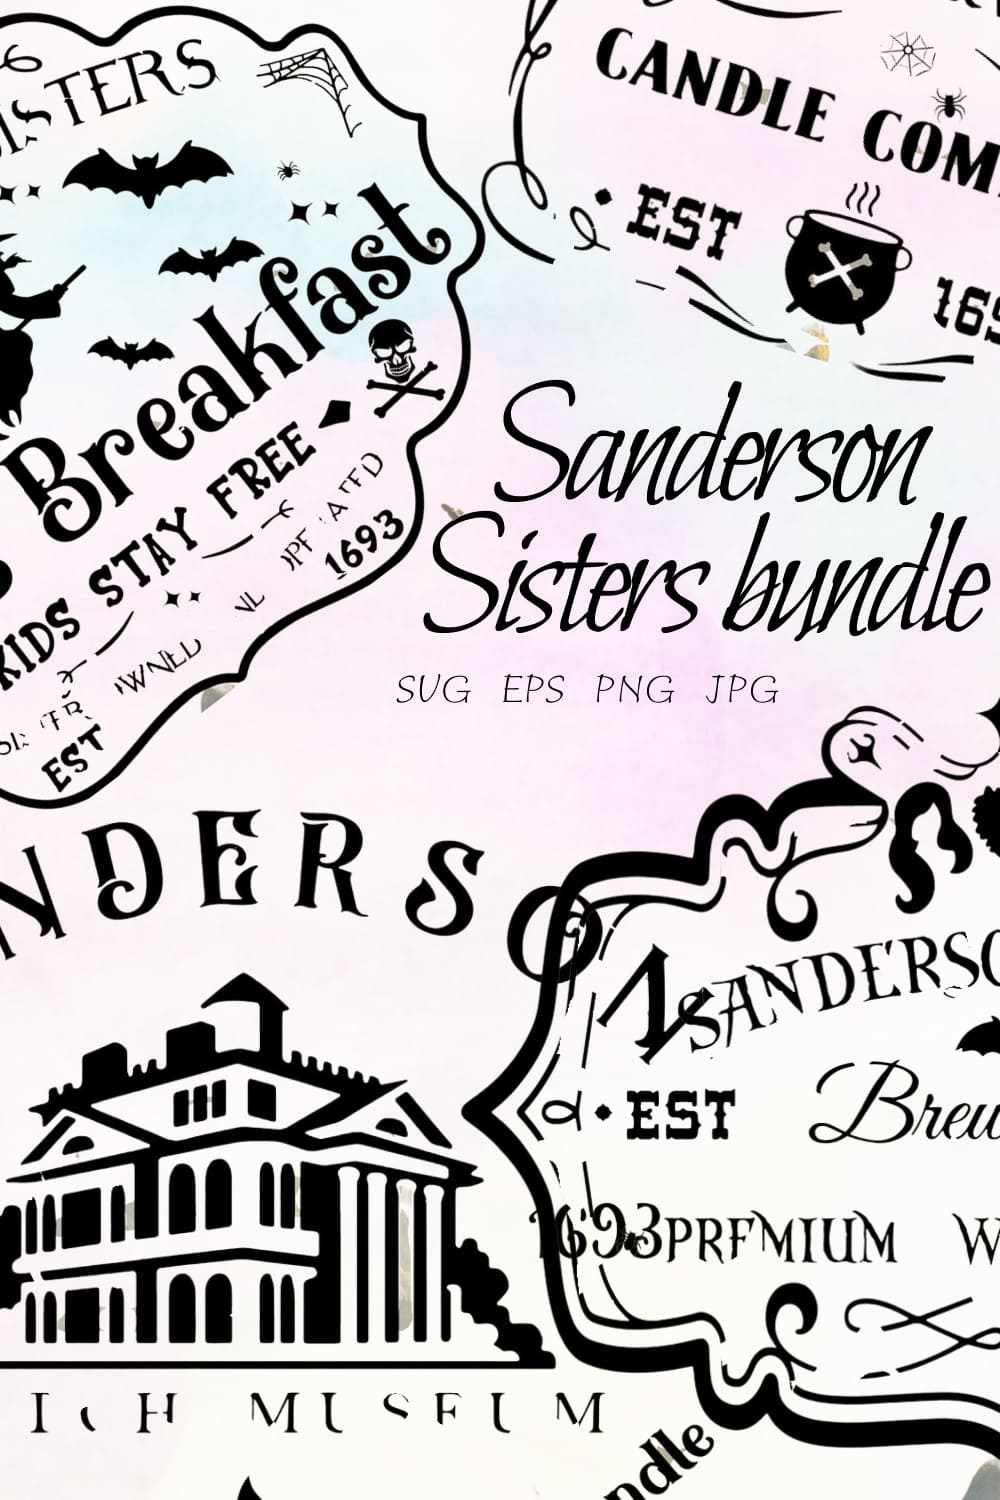 Sanderson Sisters SVG.